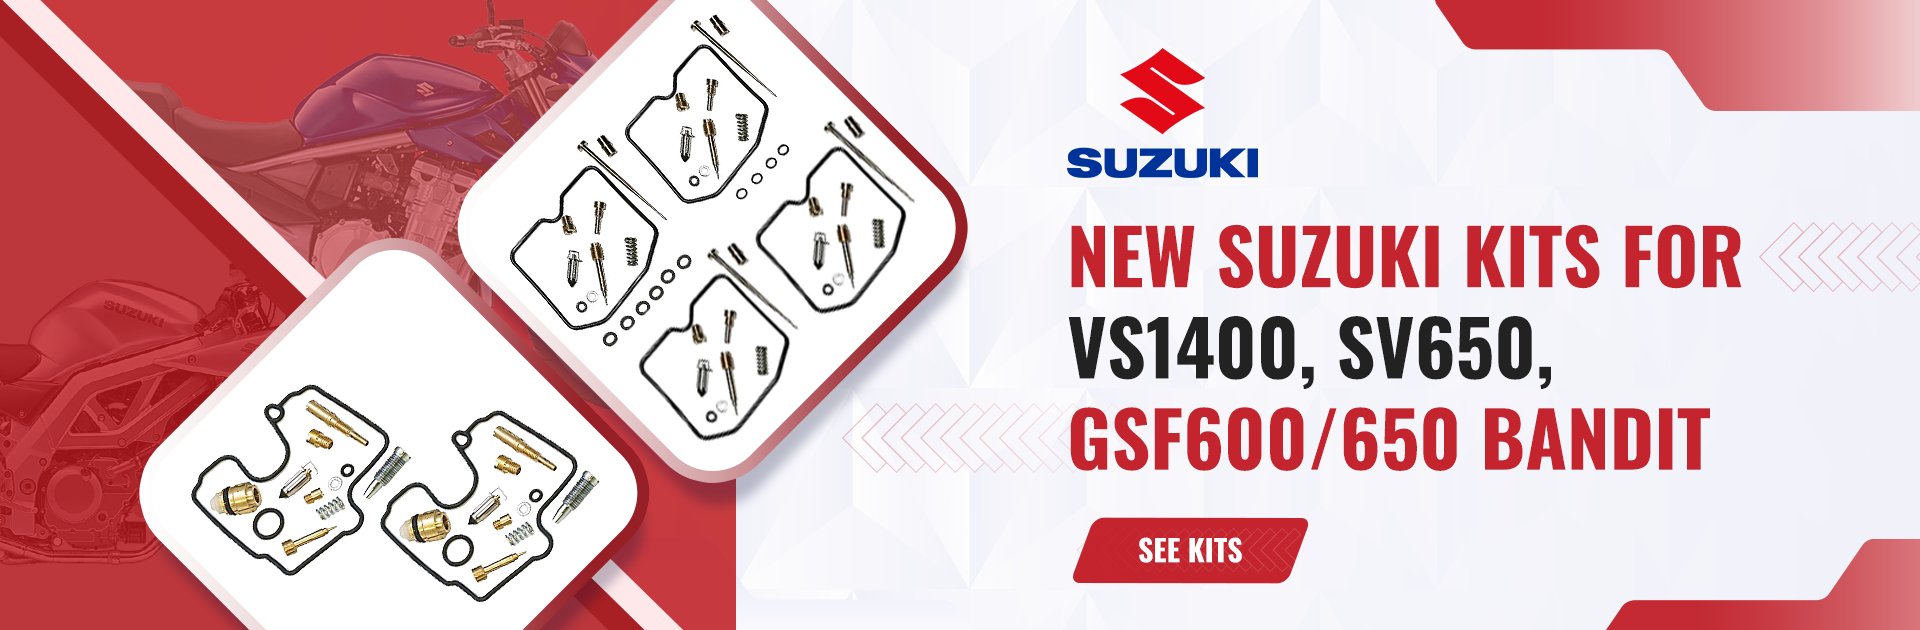 Nuevos Kits Suzuki